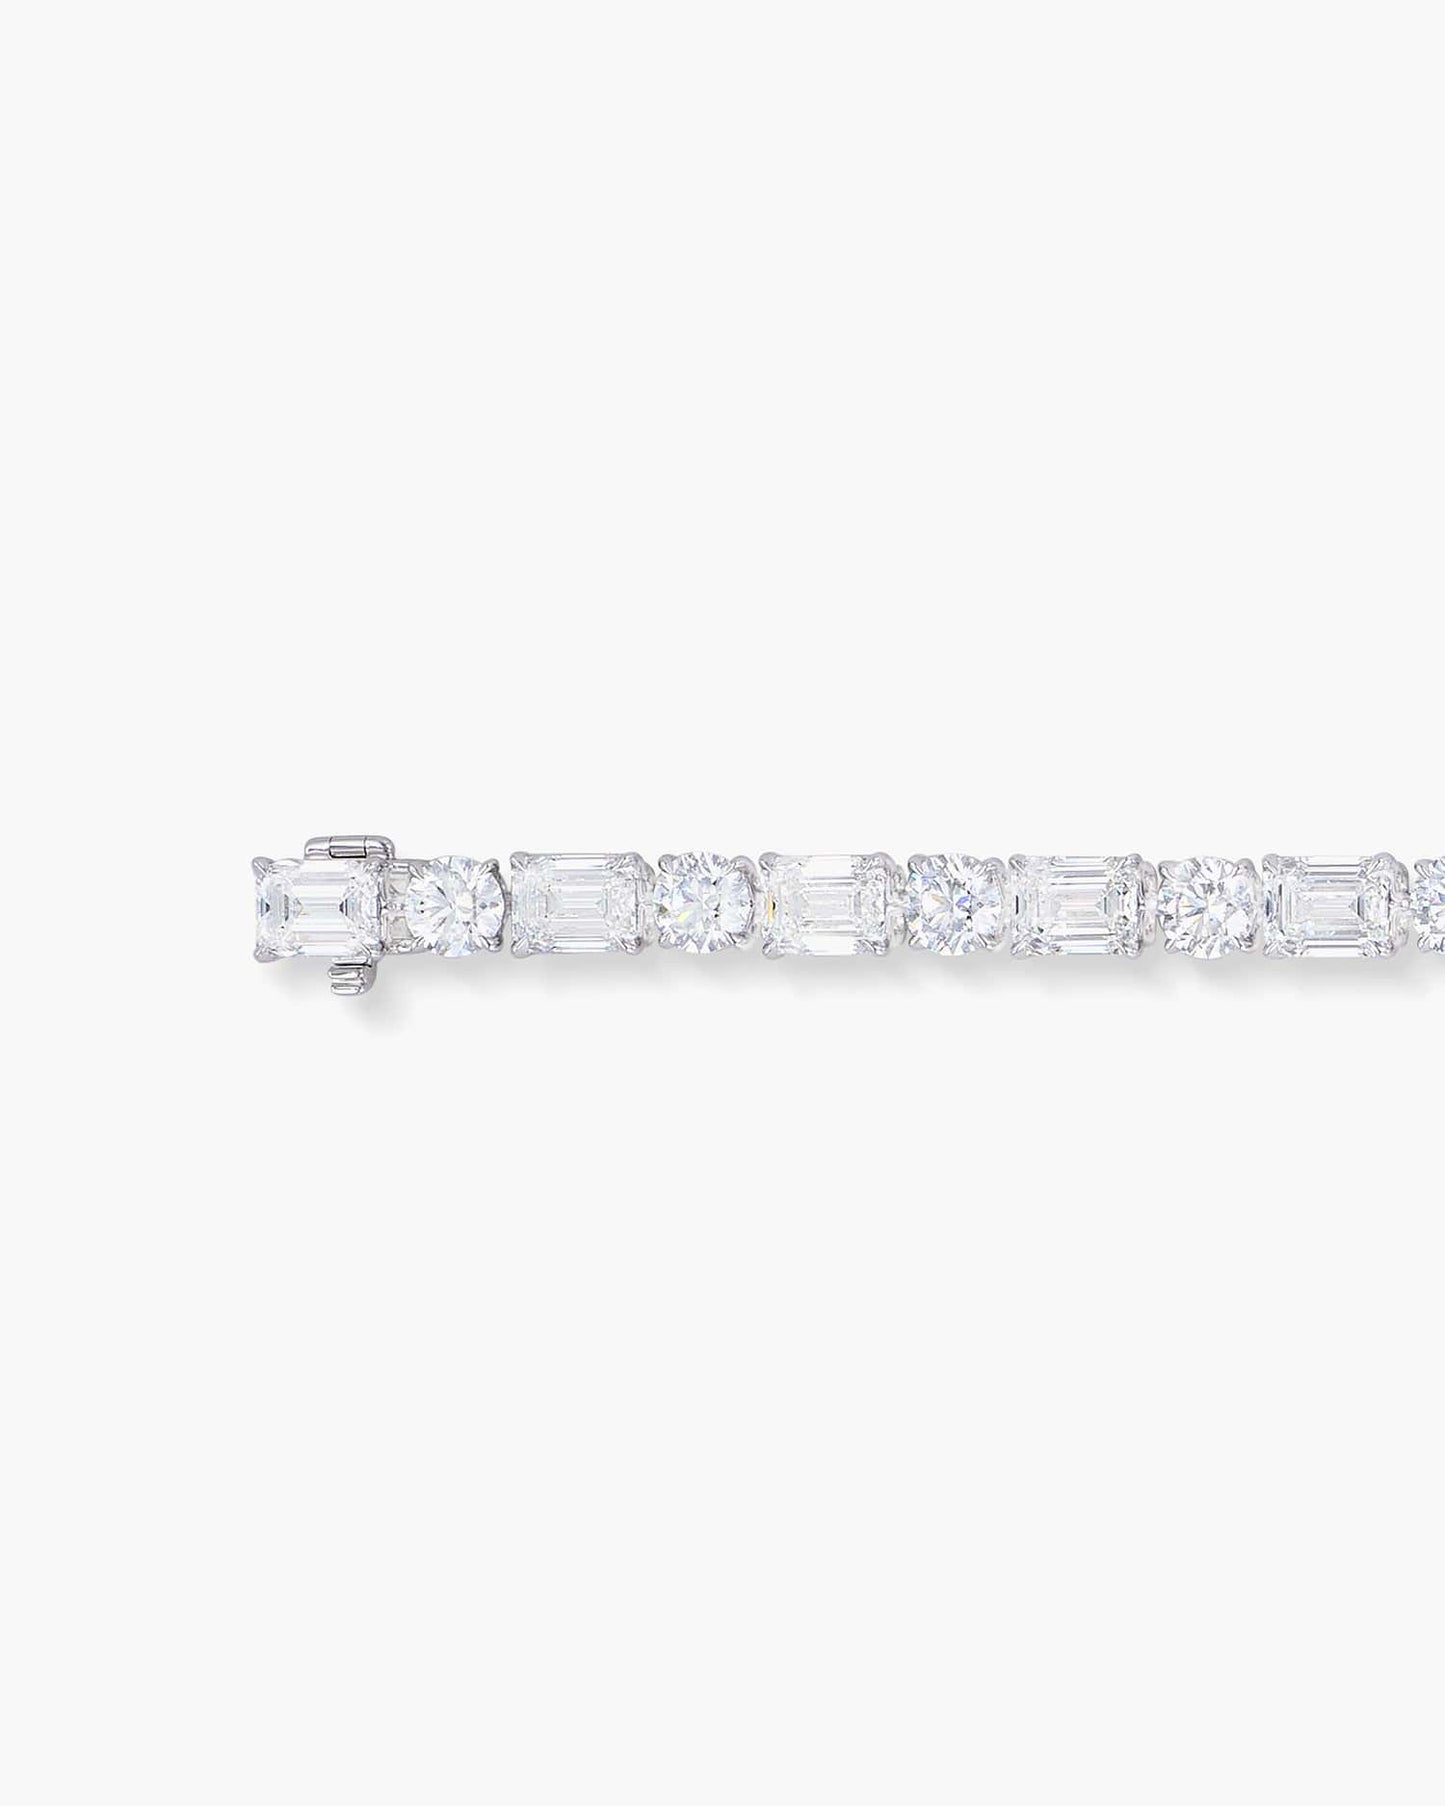 Emerald Cut and Round Brilliant Cut Diamond Bracelet (0.70 carat)